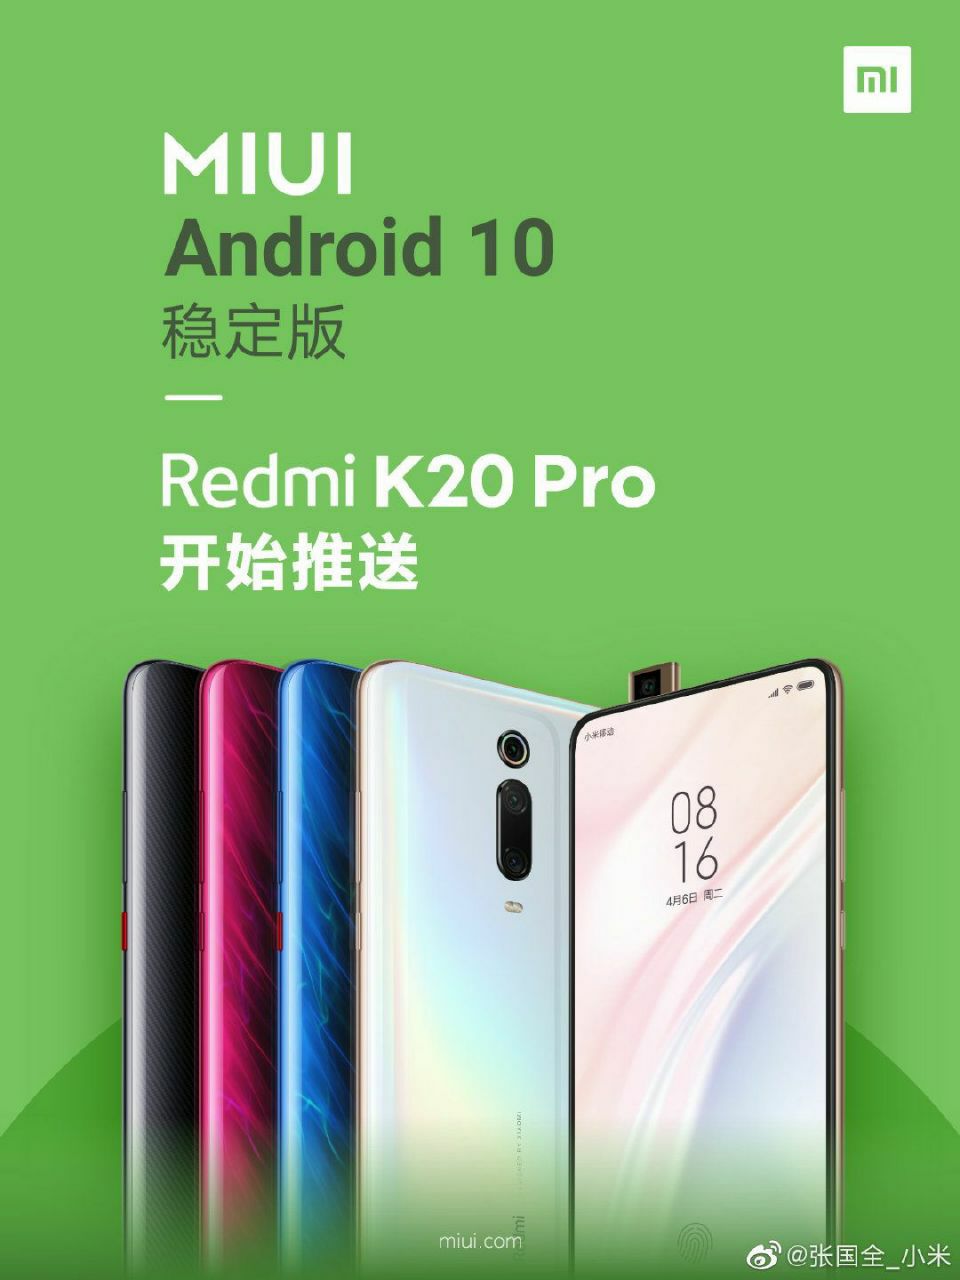 Redmi K20 pro sudah menerima Android 10